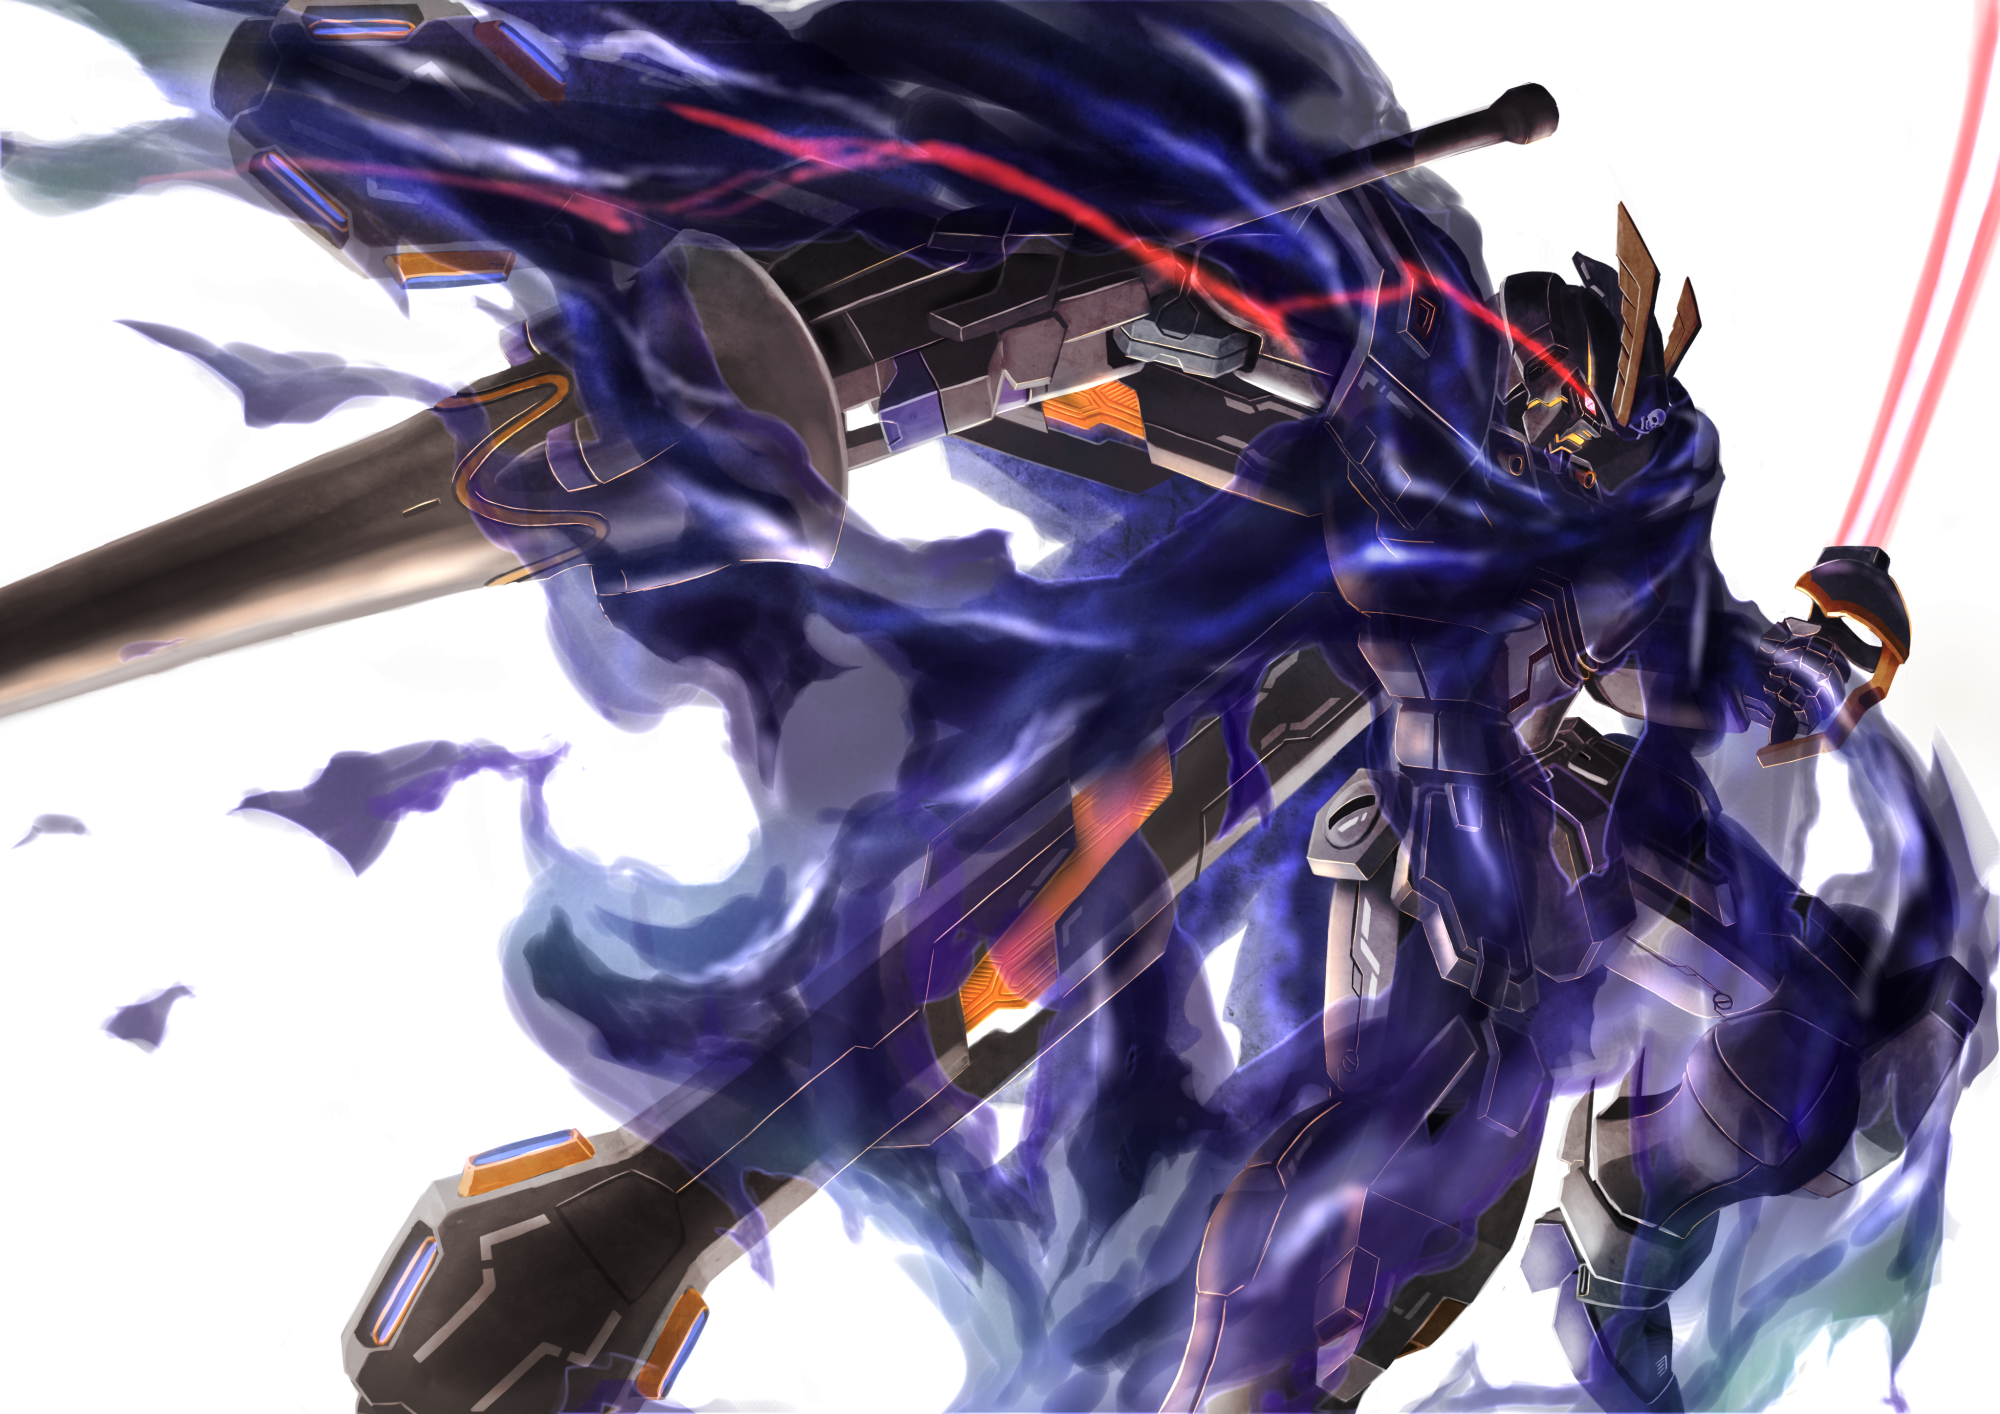 Crossbone Gundam X 2 Mobile Suit Crossbone Gundam Super Robot Taisen Anime Mechs Gundam Artwork Digi 2000x1414